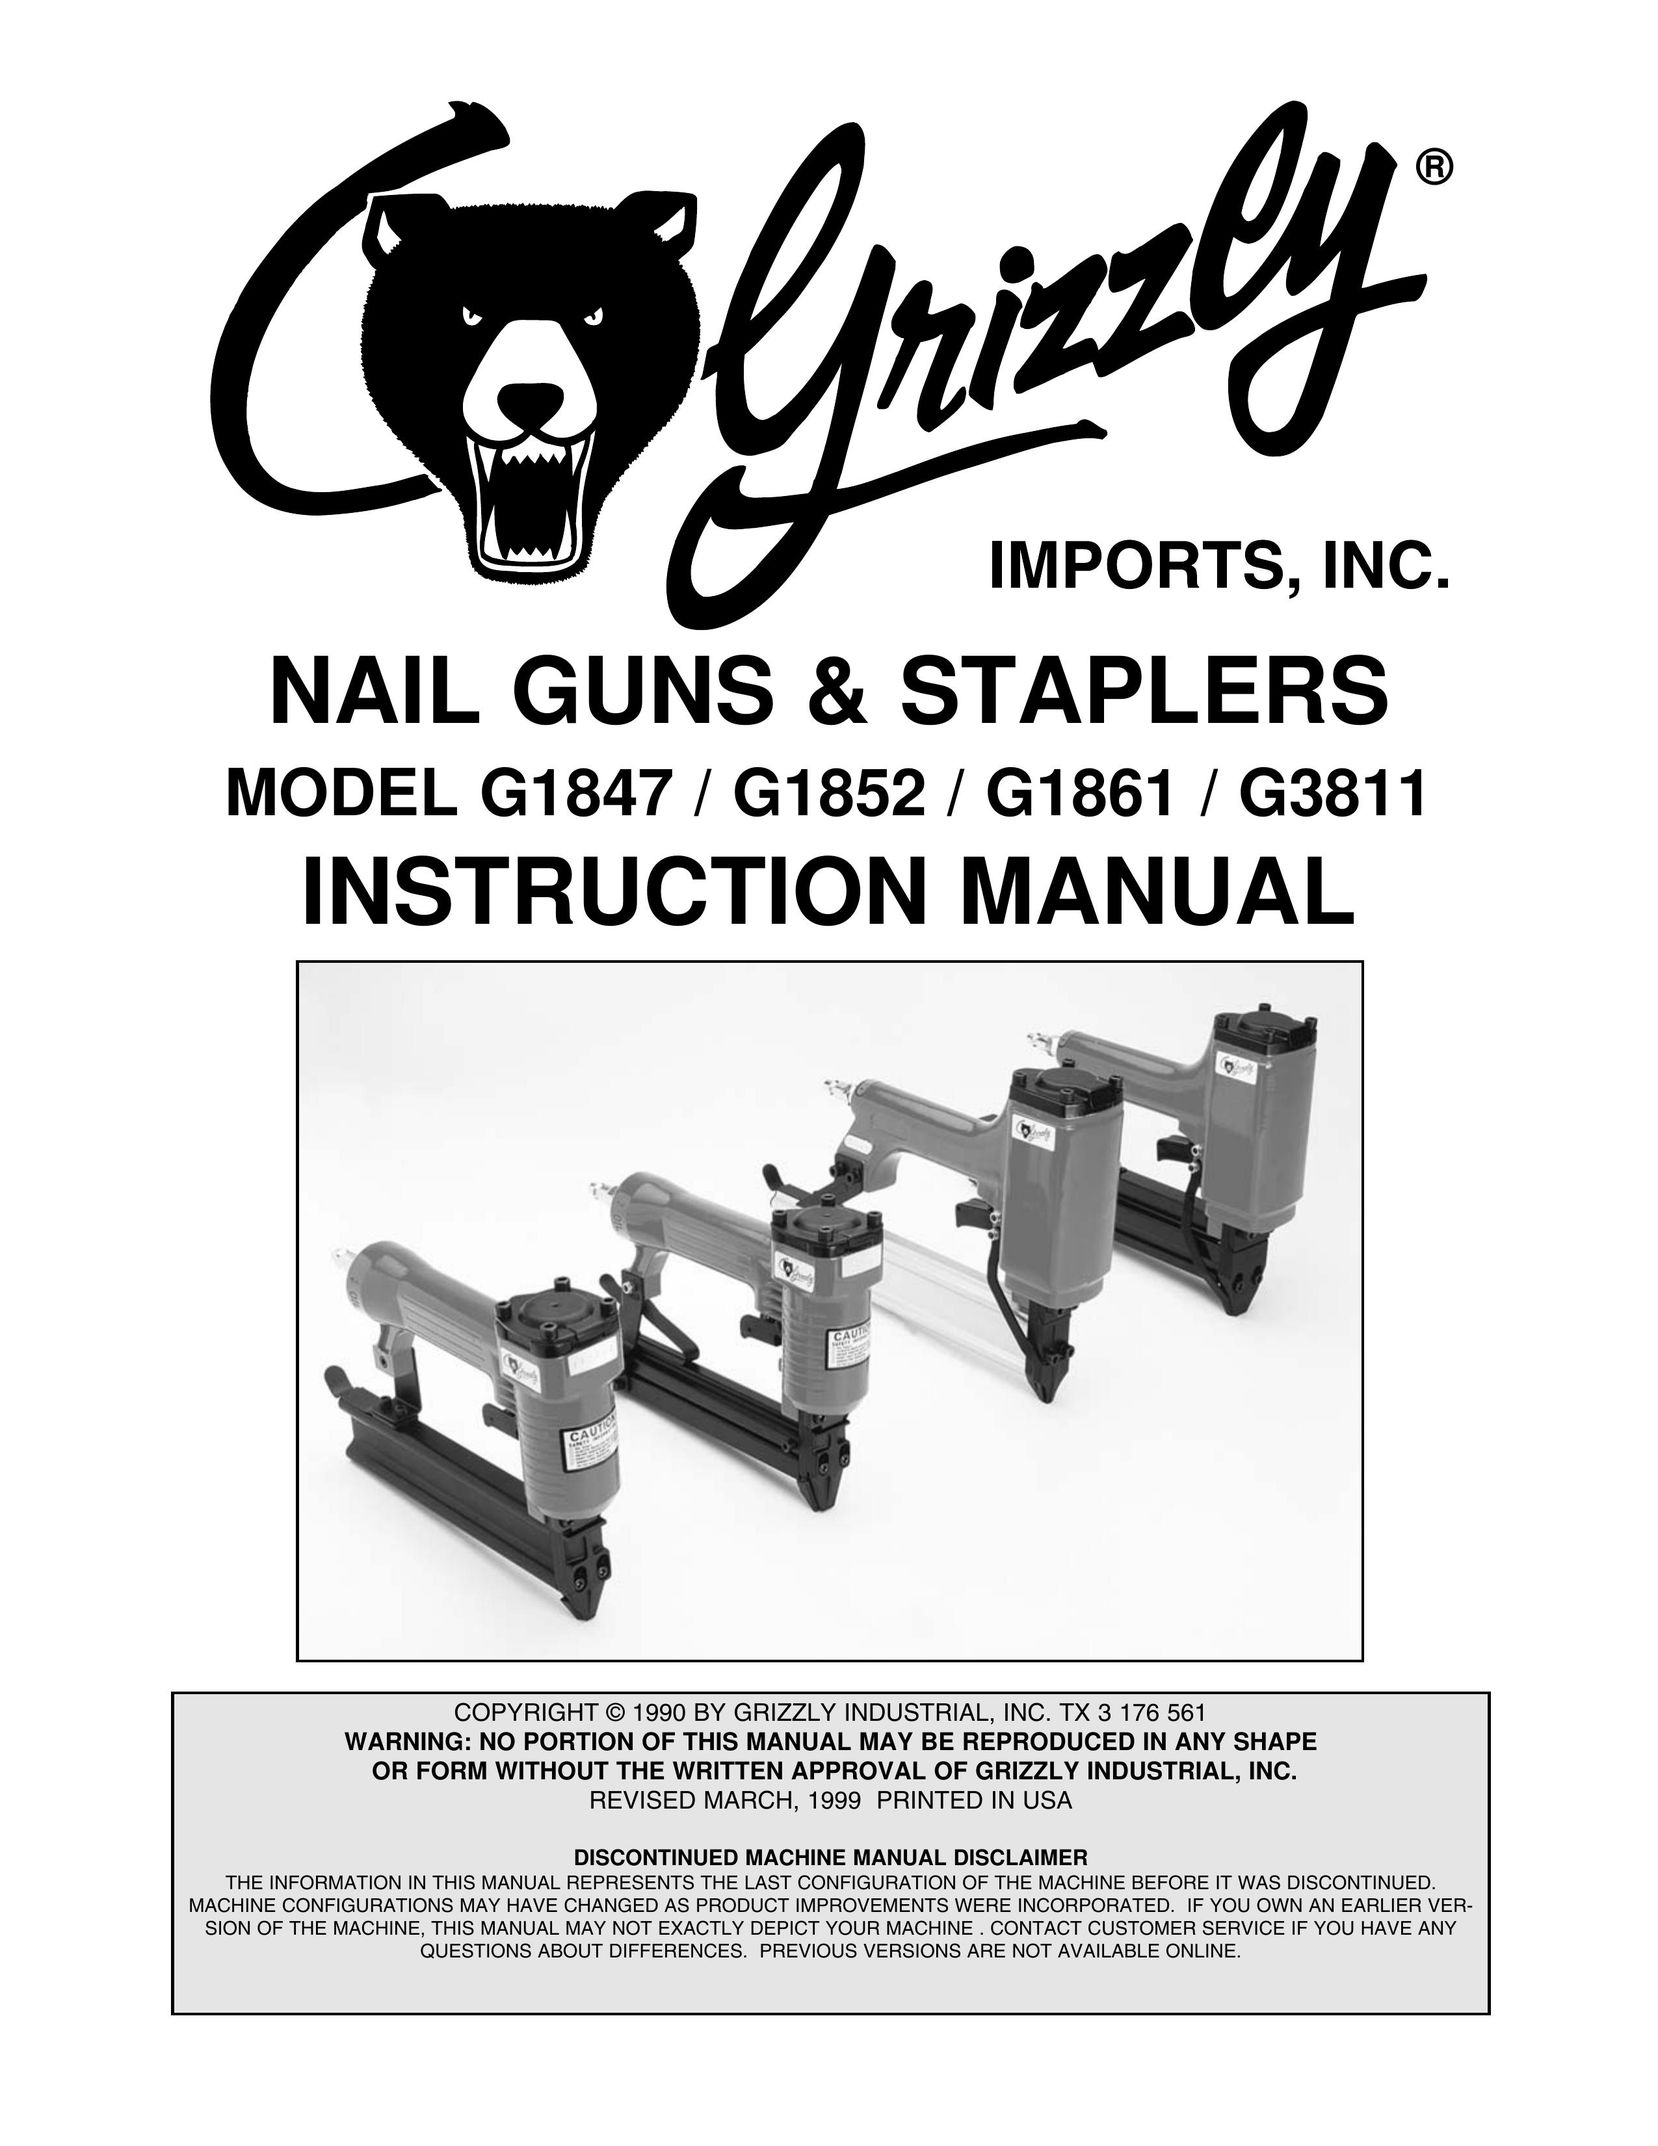 Grizzly G1861 Nail Gun User Manual